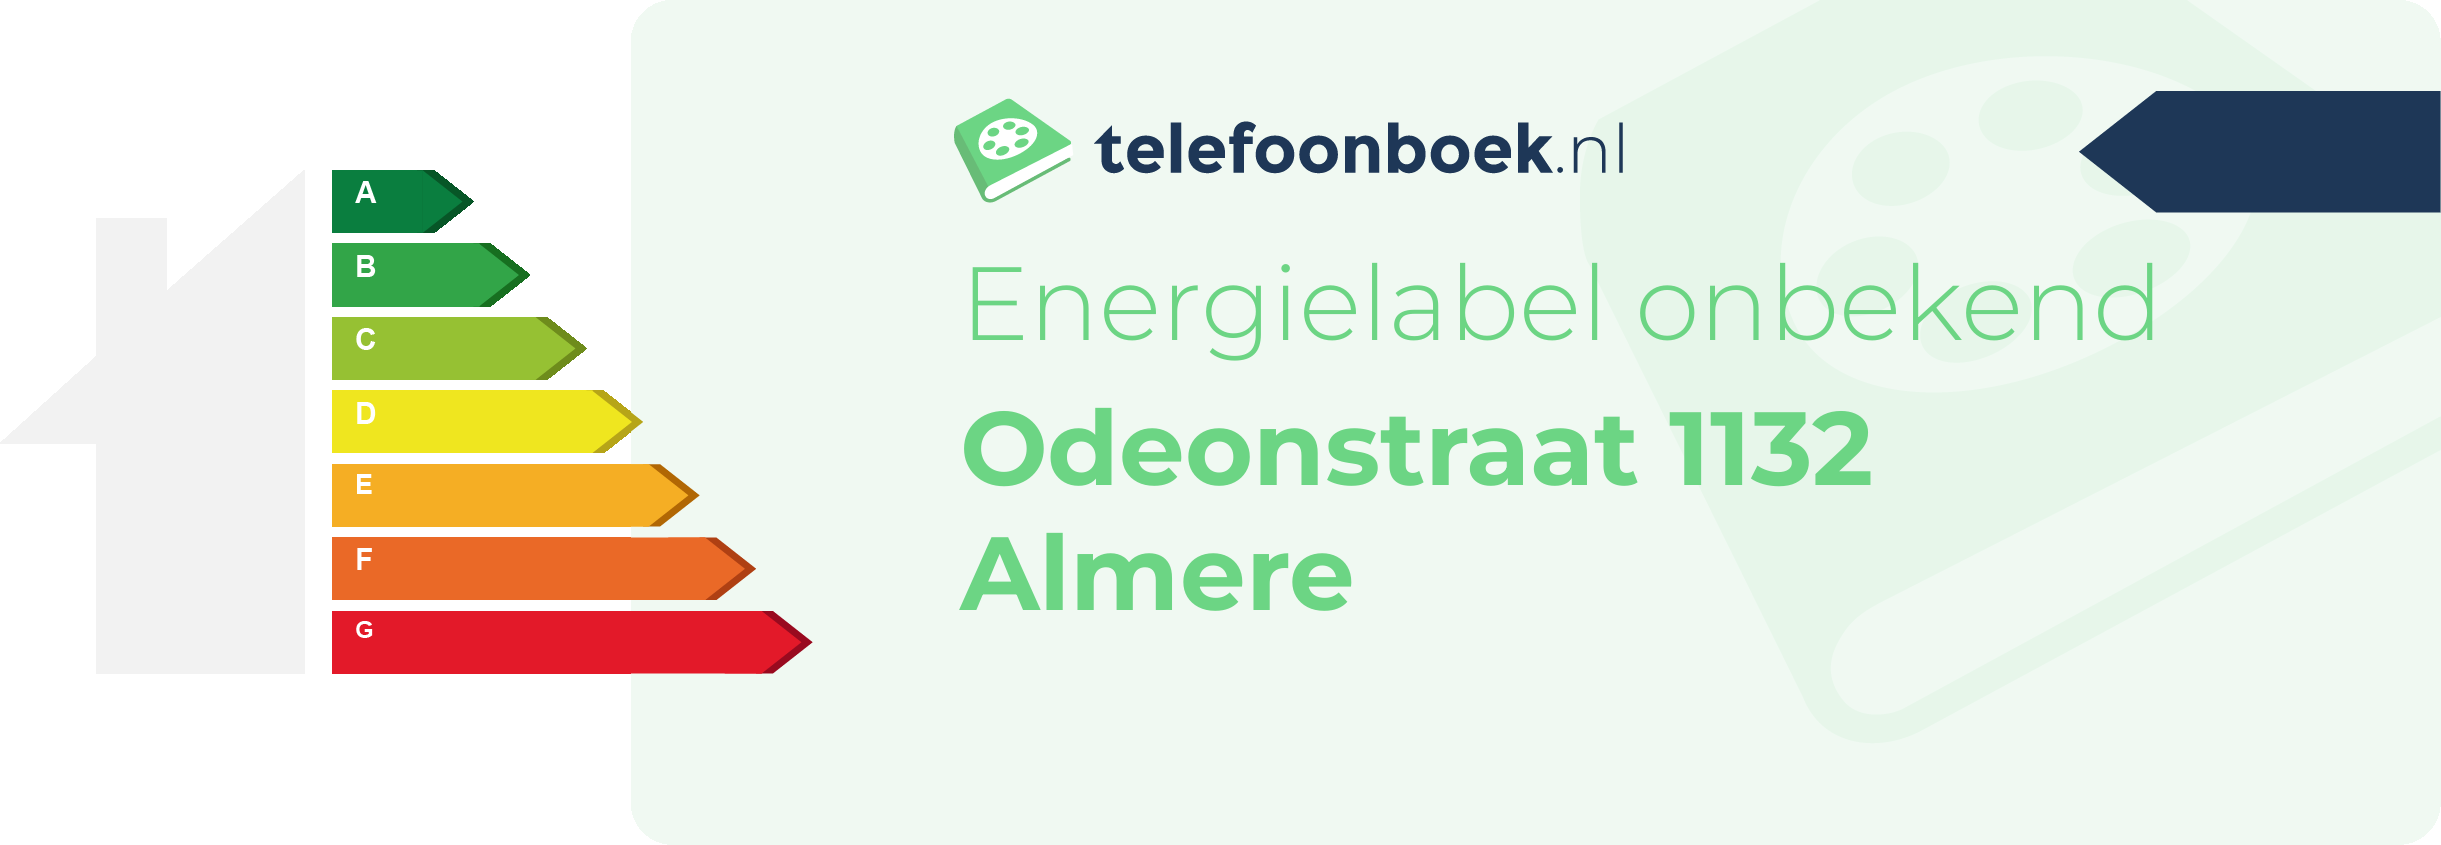 Energielabel Odeonstraat 1132 Almere